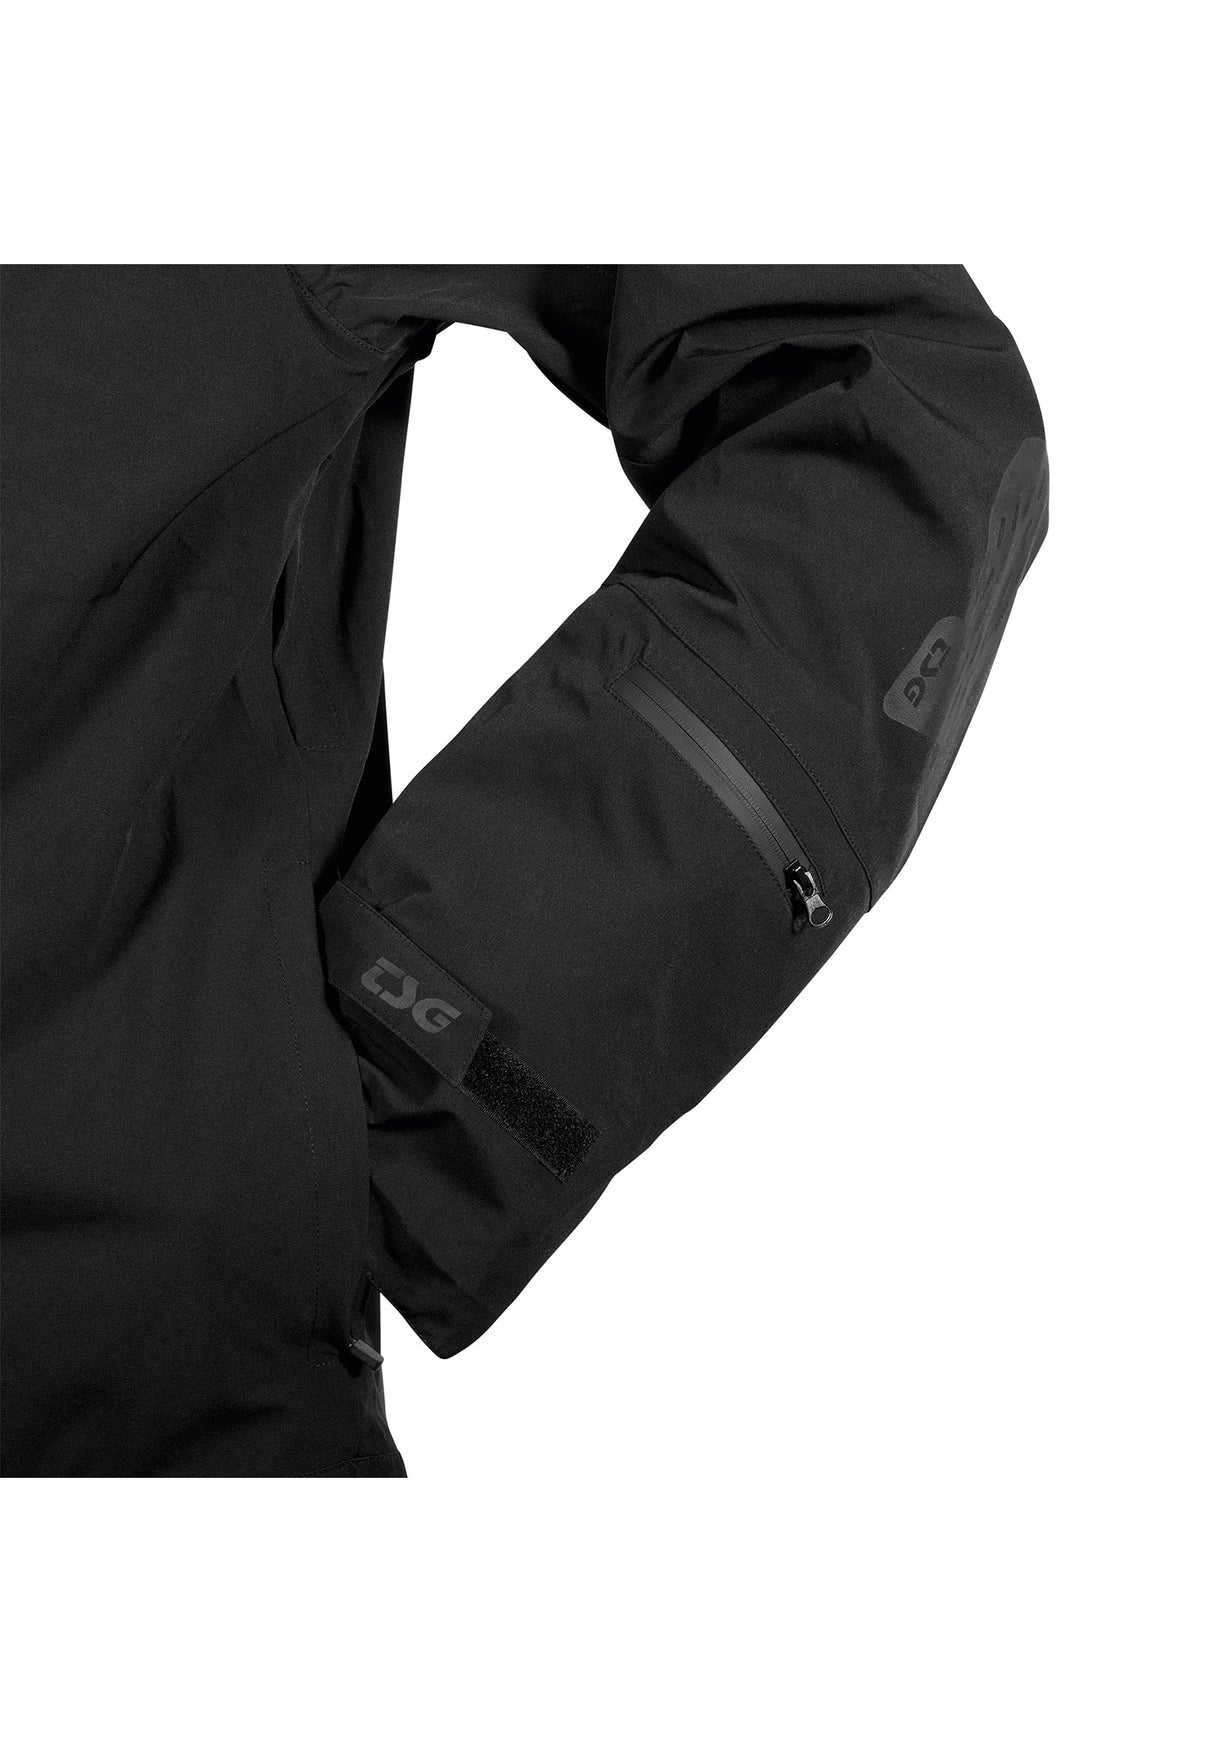 Superlight Shell-Jacket black Unteransicht